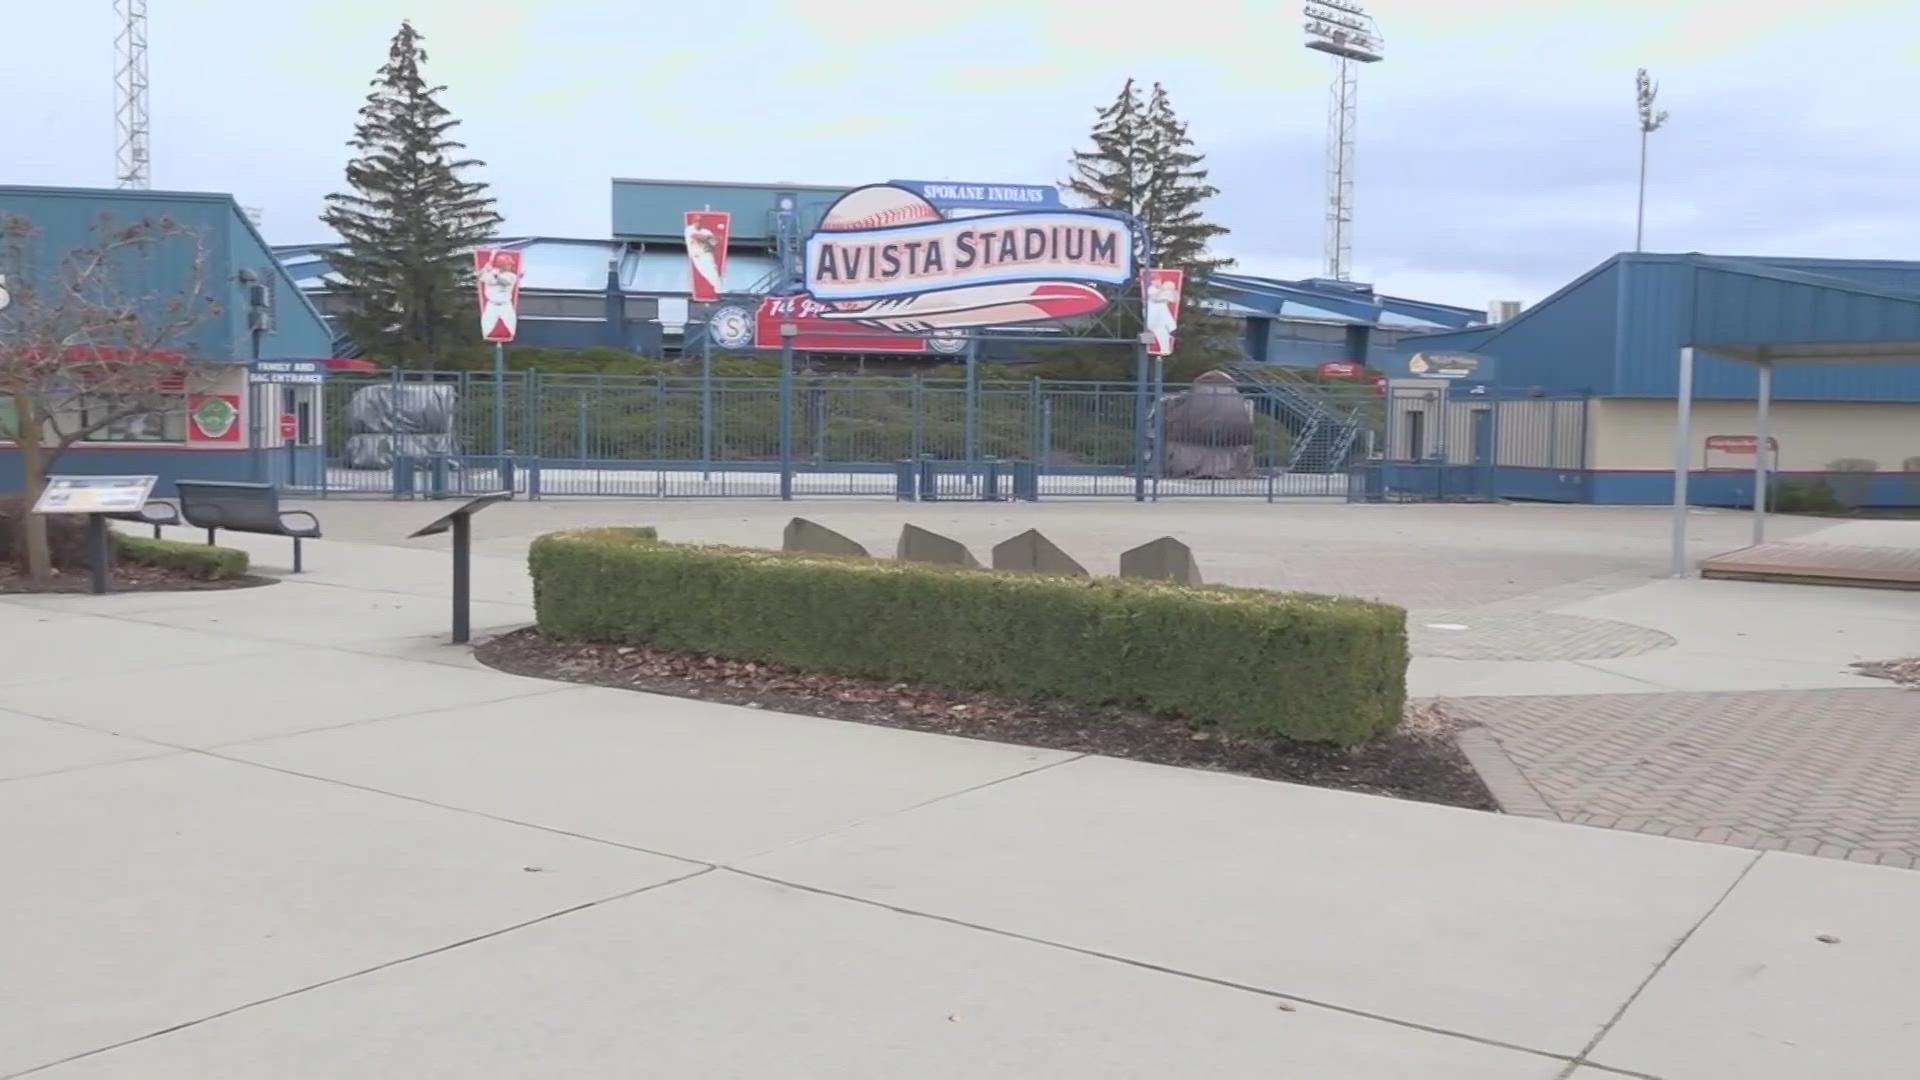 $22 million renovations to take place at Avista Stadium